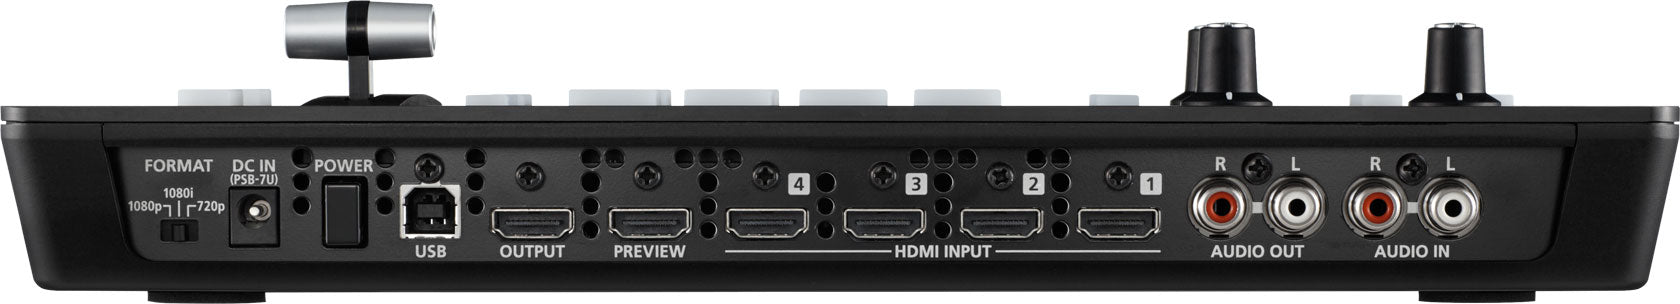 Roland V-1HD HD Video Switcher